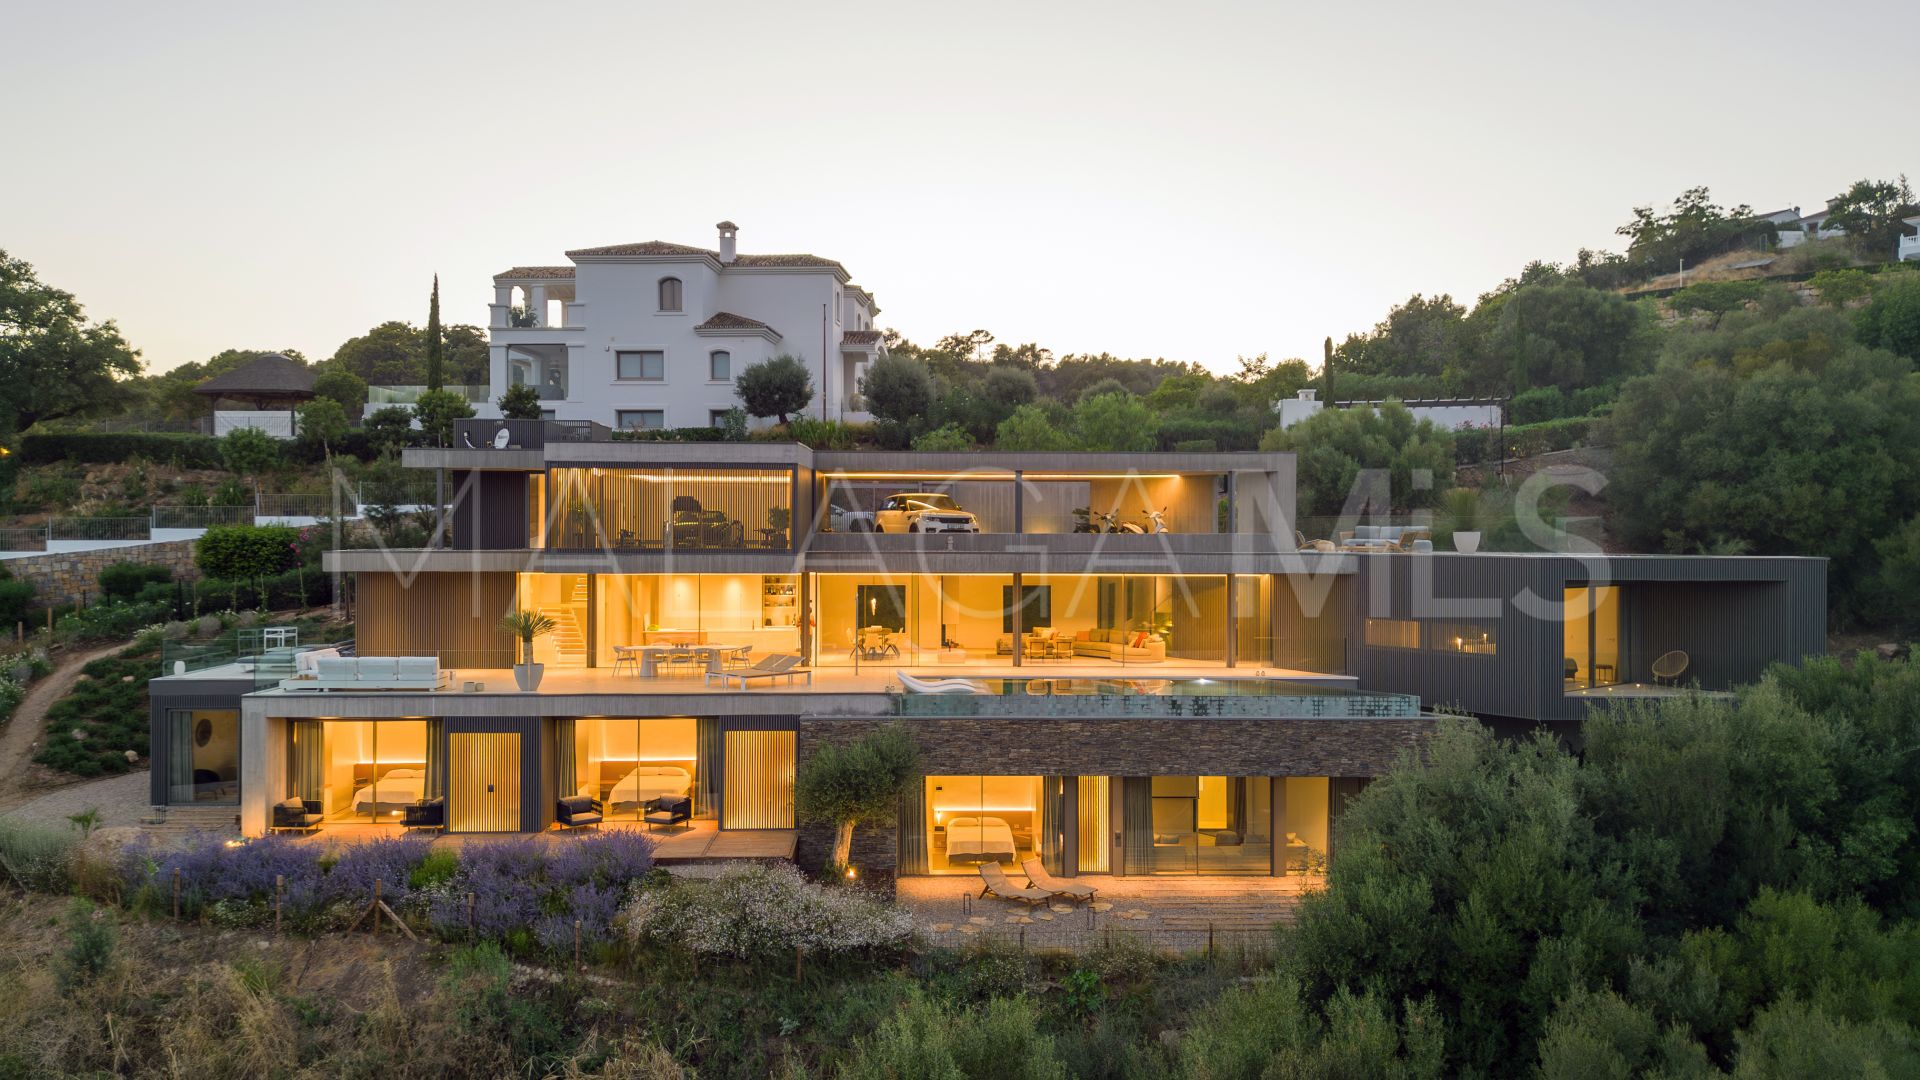 6 bedrooms villa in Marbella Club Golf Resort for sale